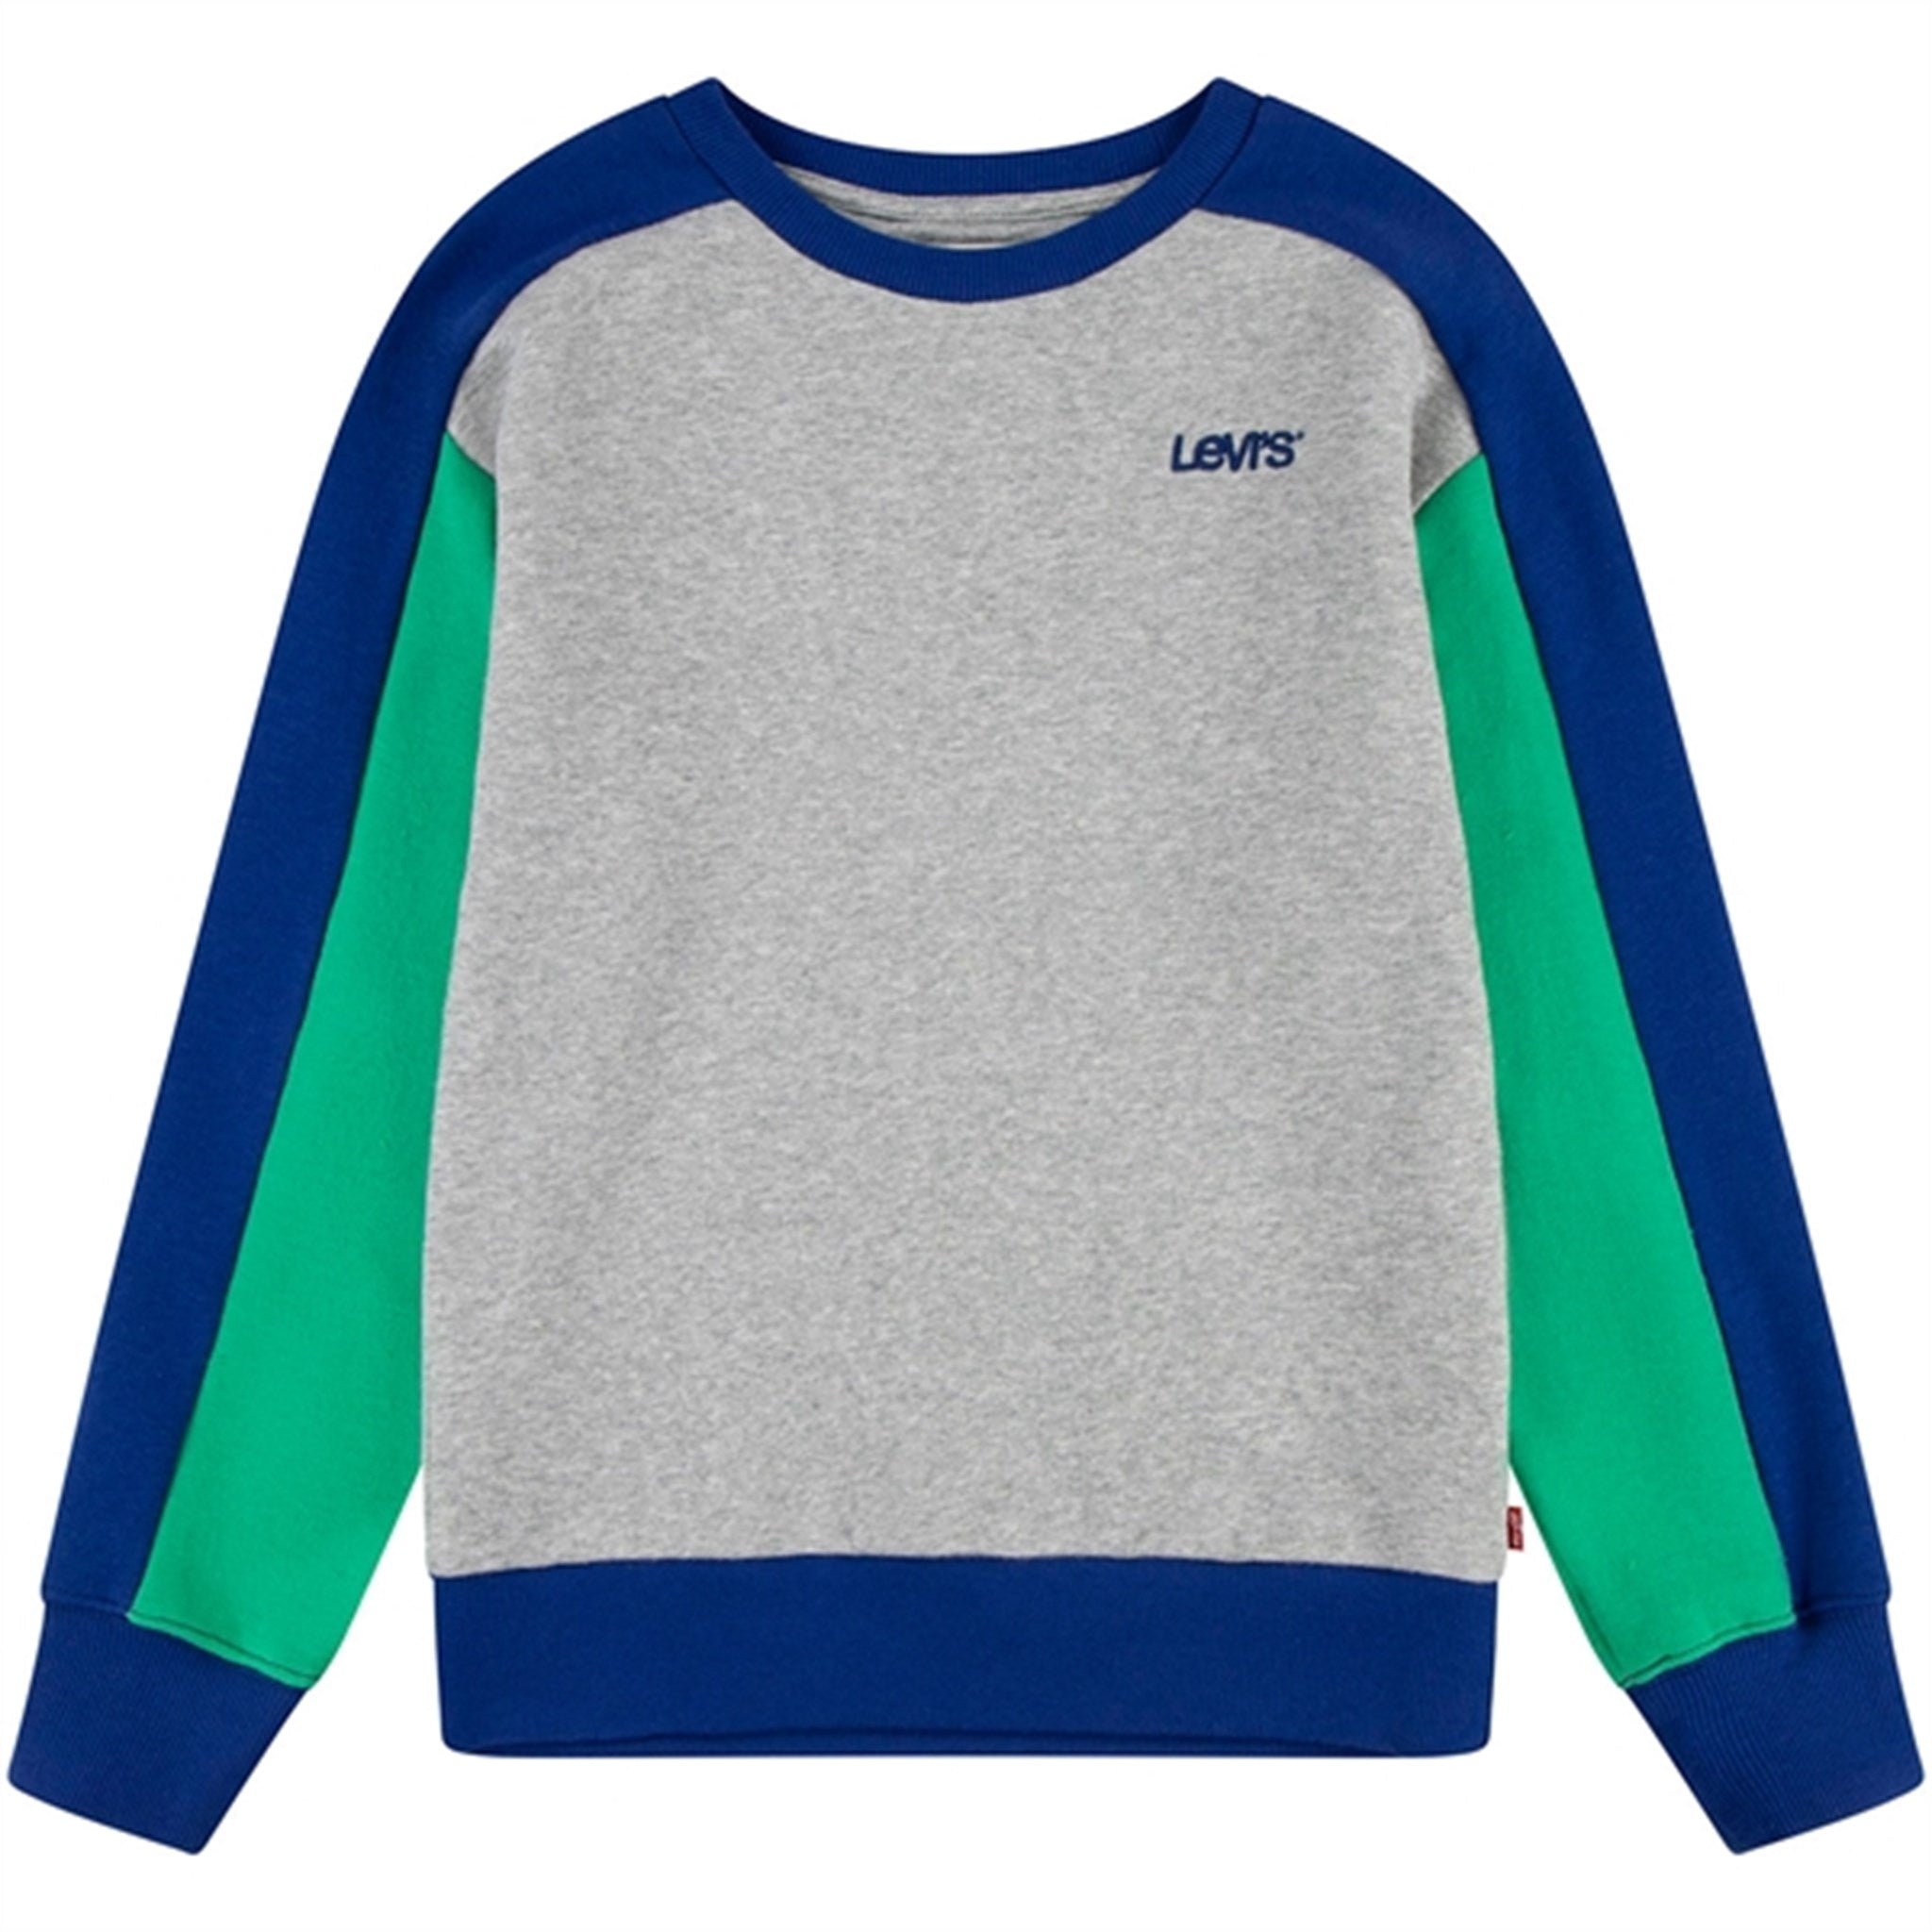 Levi's Colorblock Crewneck Sweatshirt Grey Heather